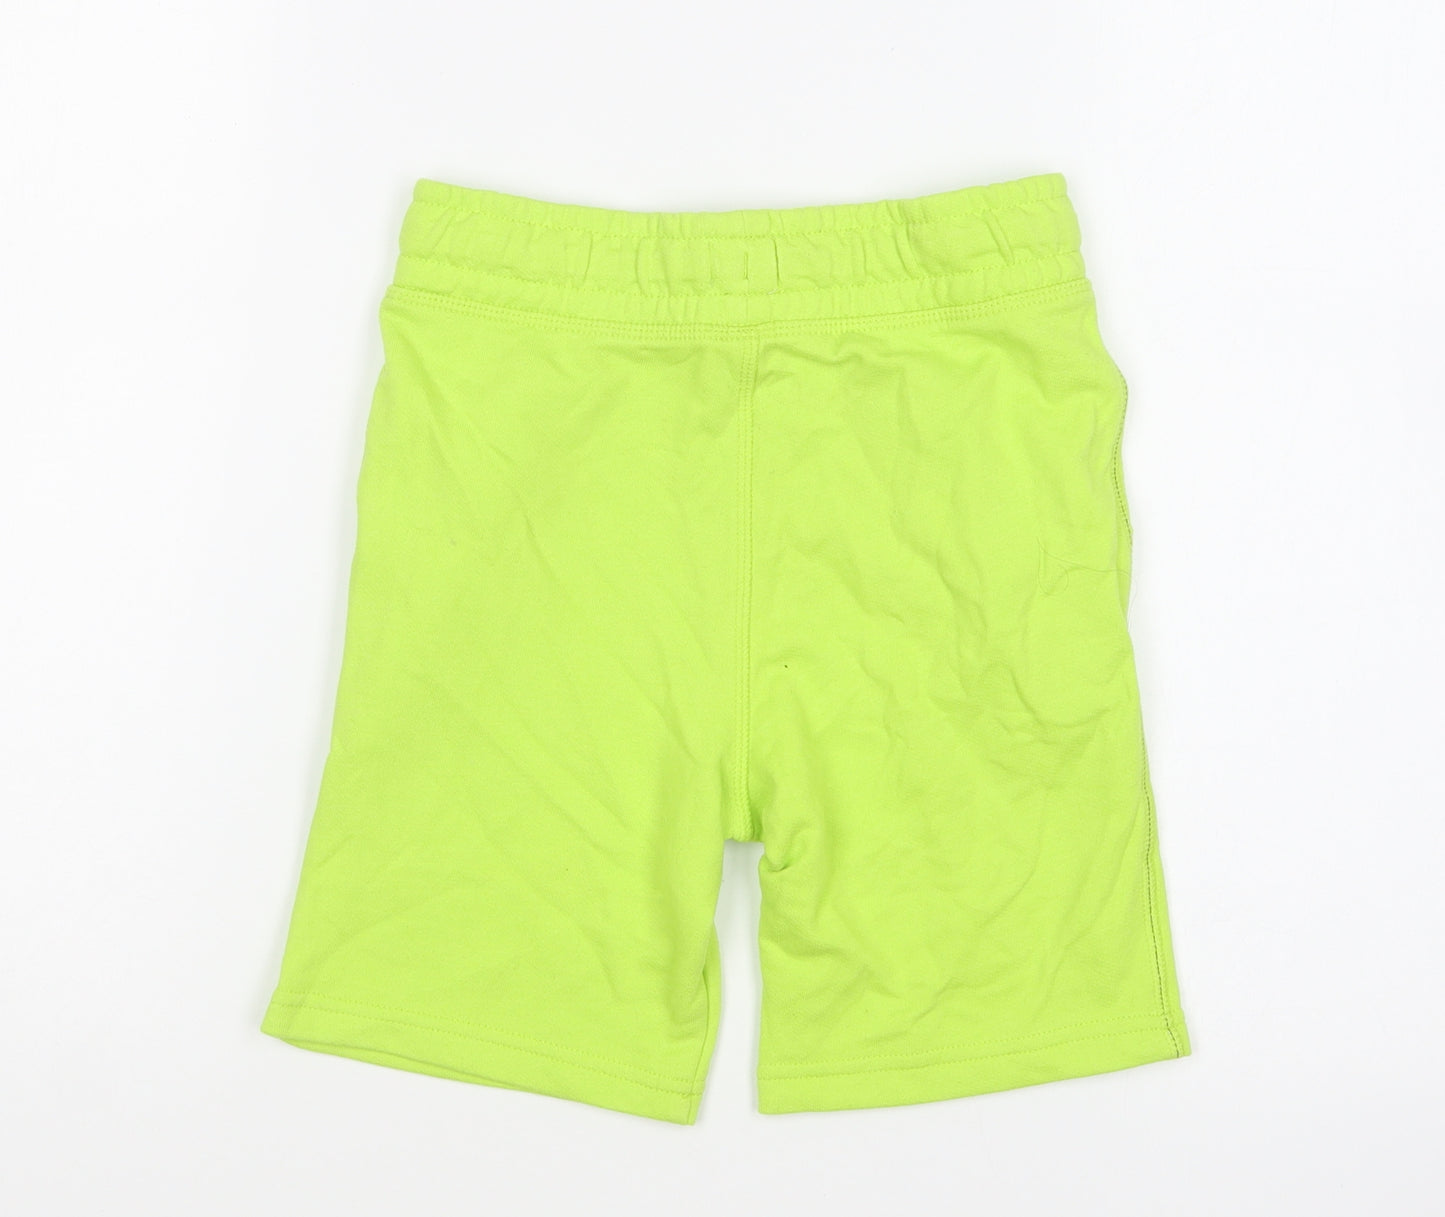 F&F Boys Green Cotton Sweat Shorts Size 6-7 Years Regular Drawstring